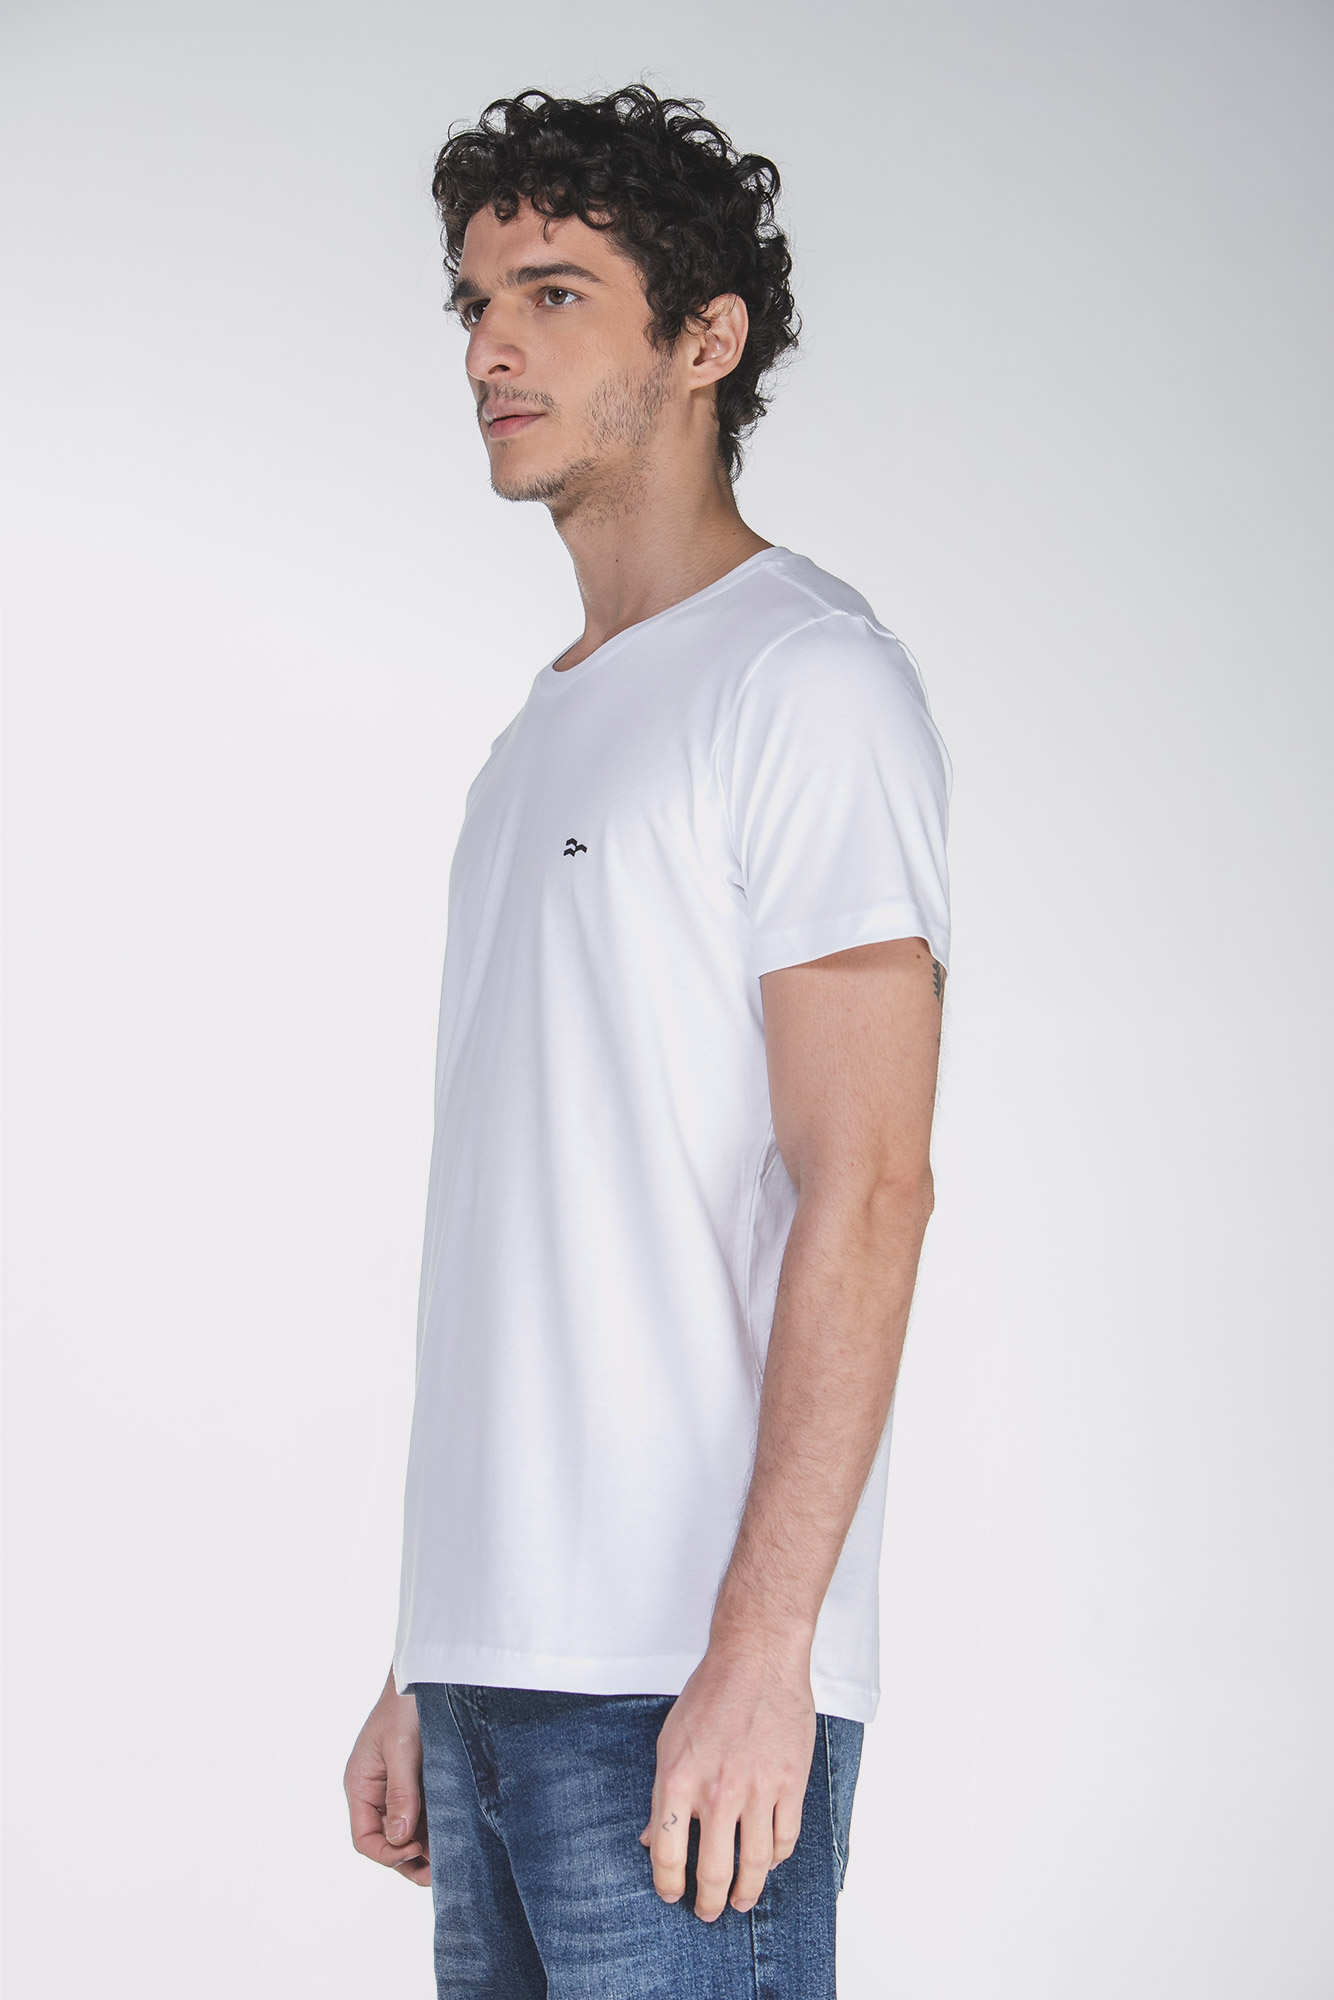 Camiseta Basic Egypt Branco/Preto